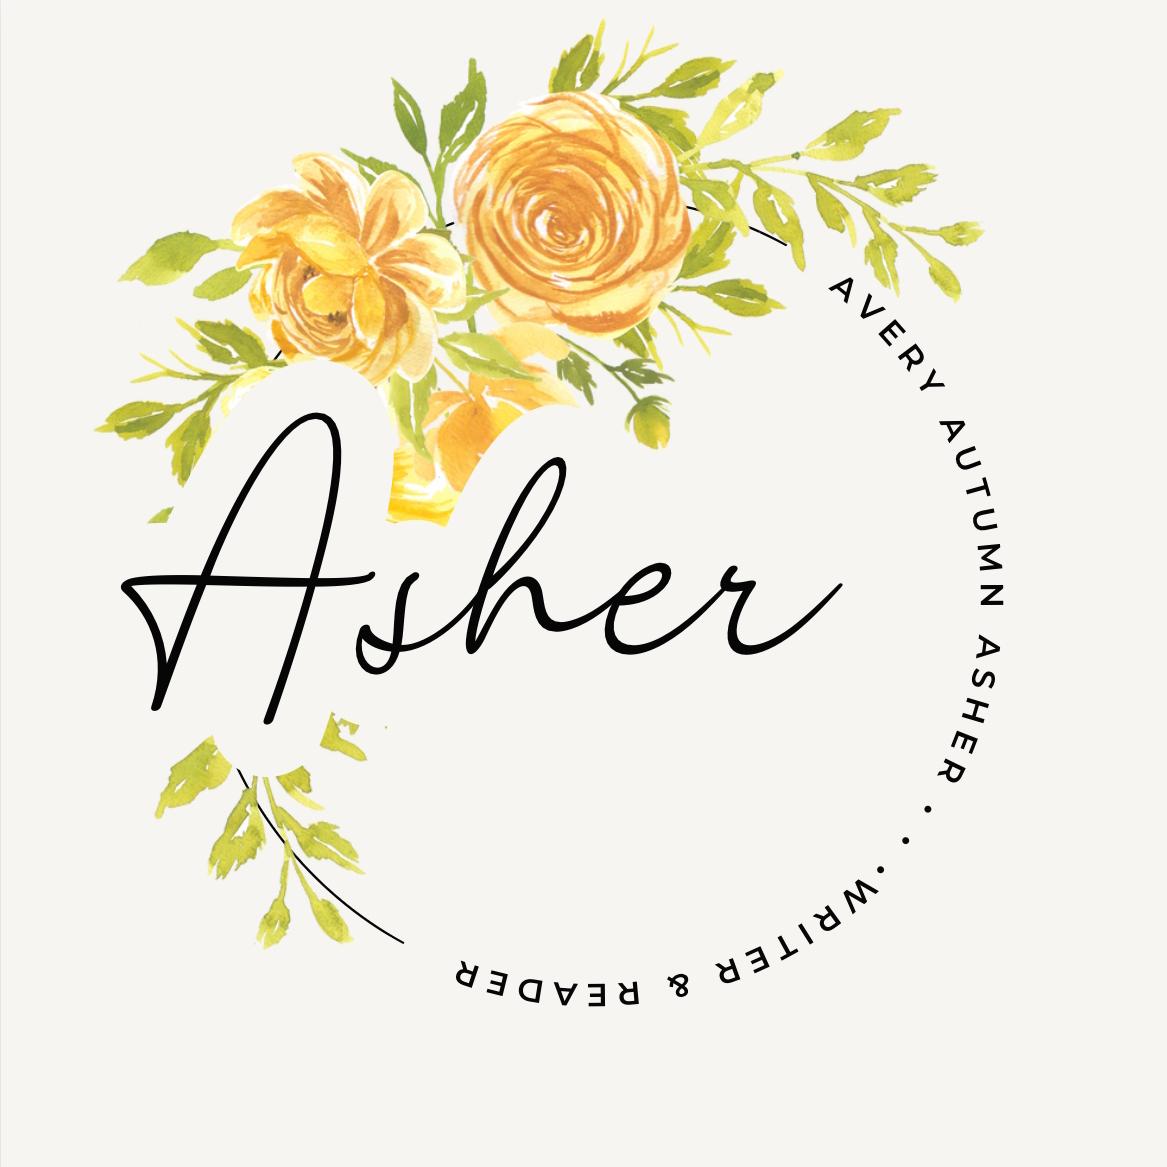 Avery Asher